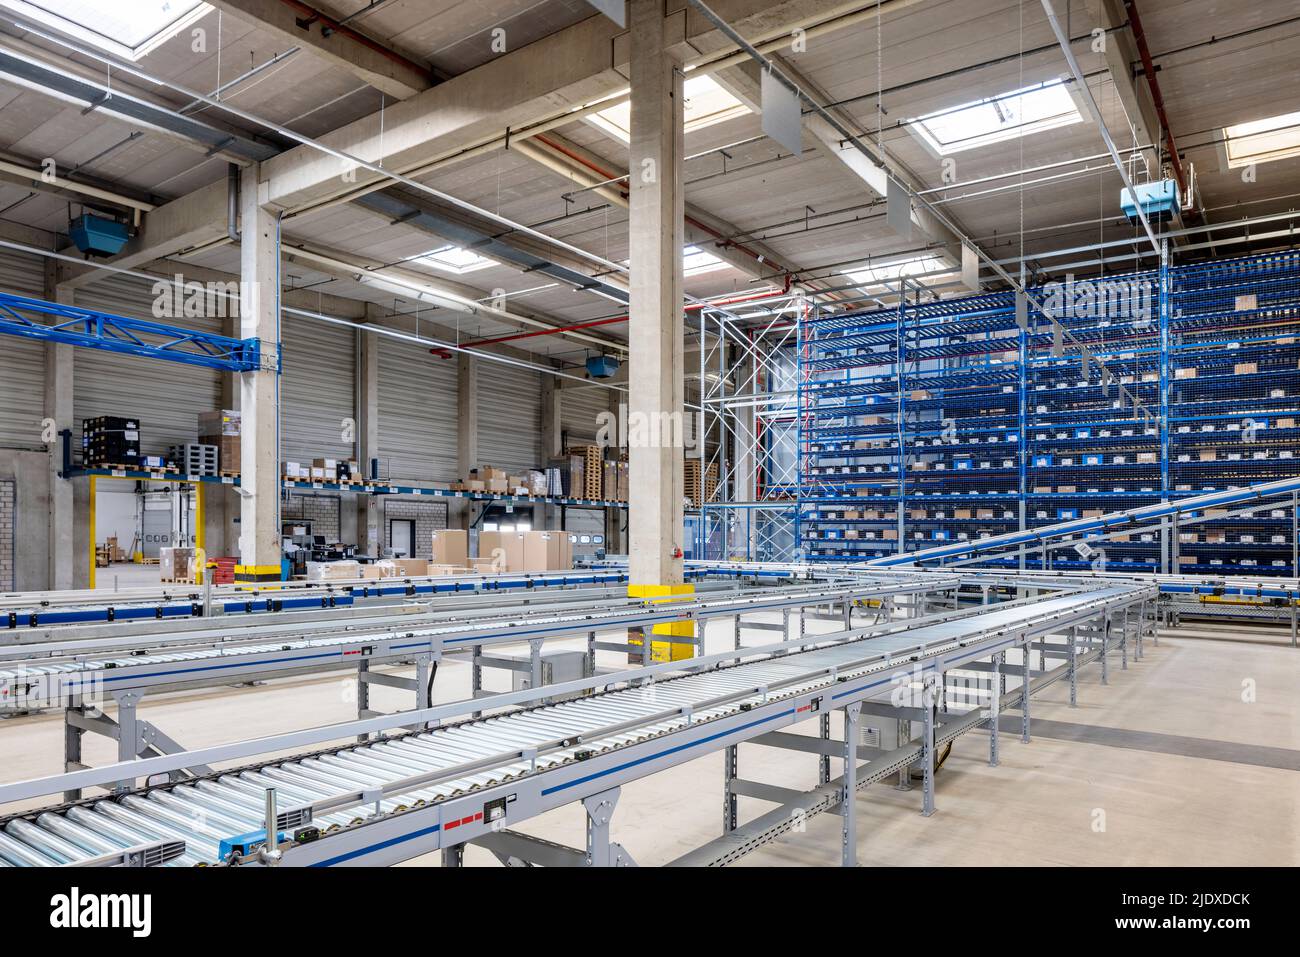 Conveyor belt in distribution warehouse Stock Photo